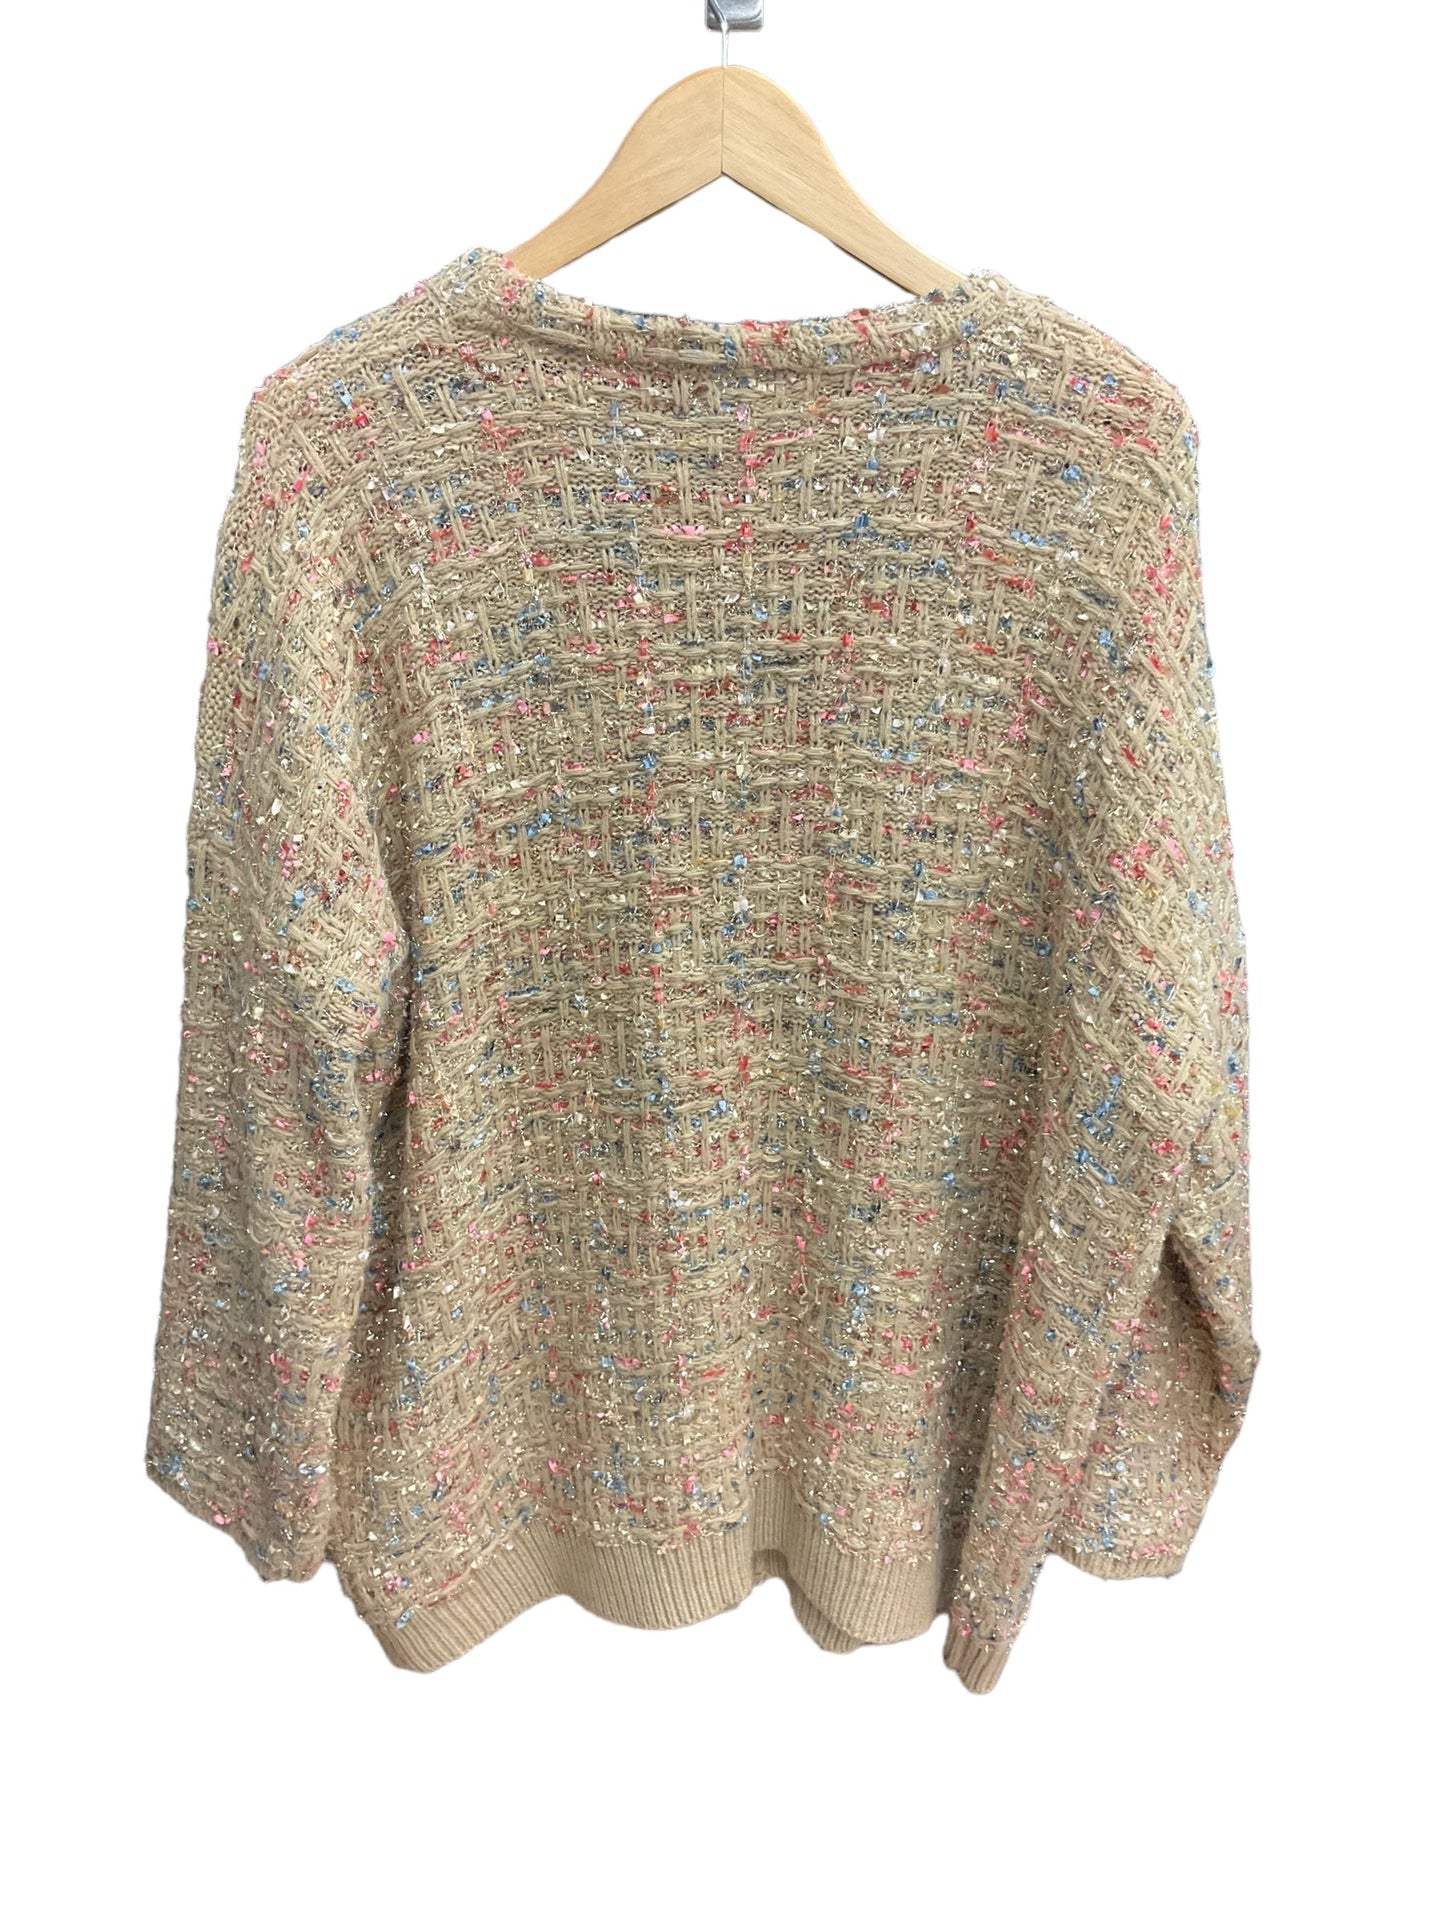 Multi-colored Sweater Cardigan Favlux, Size M